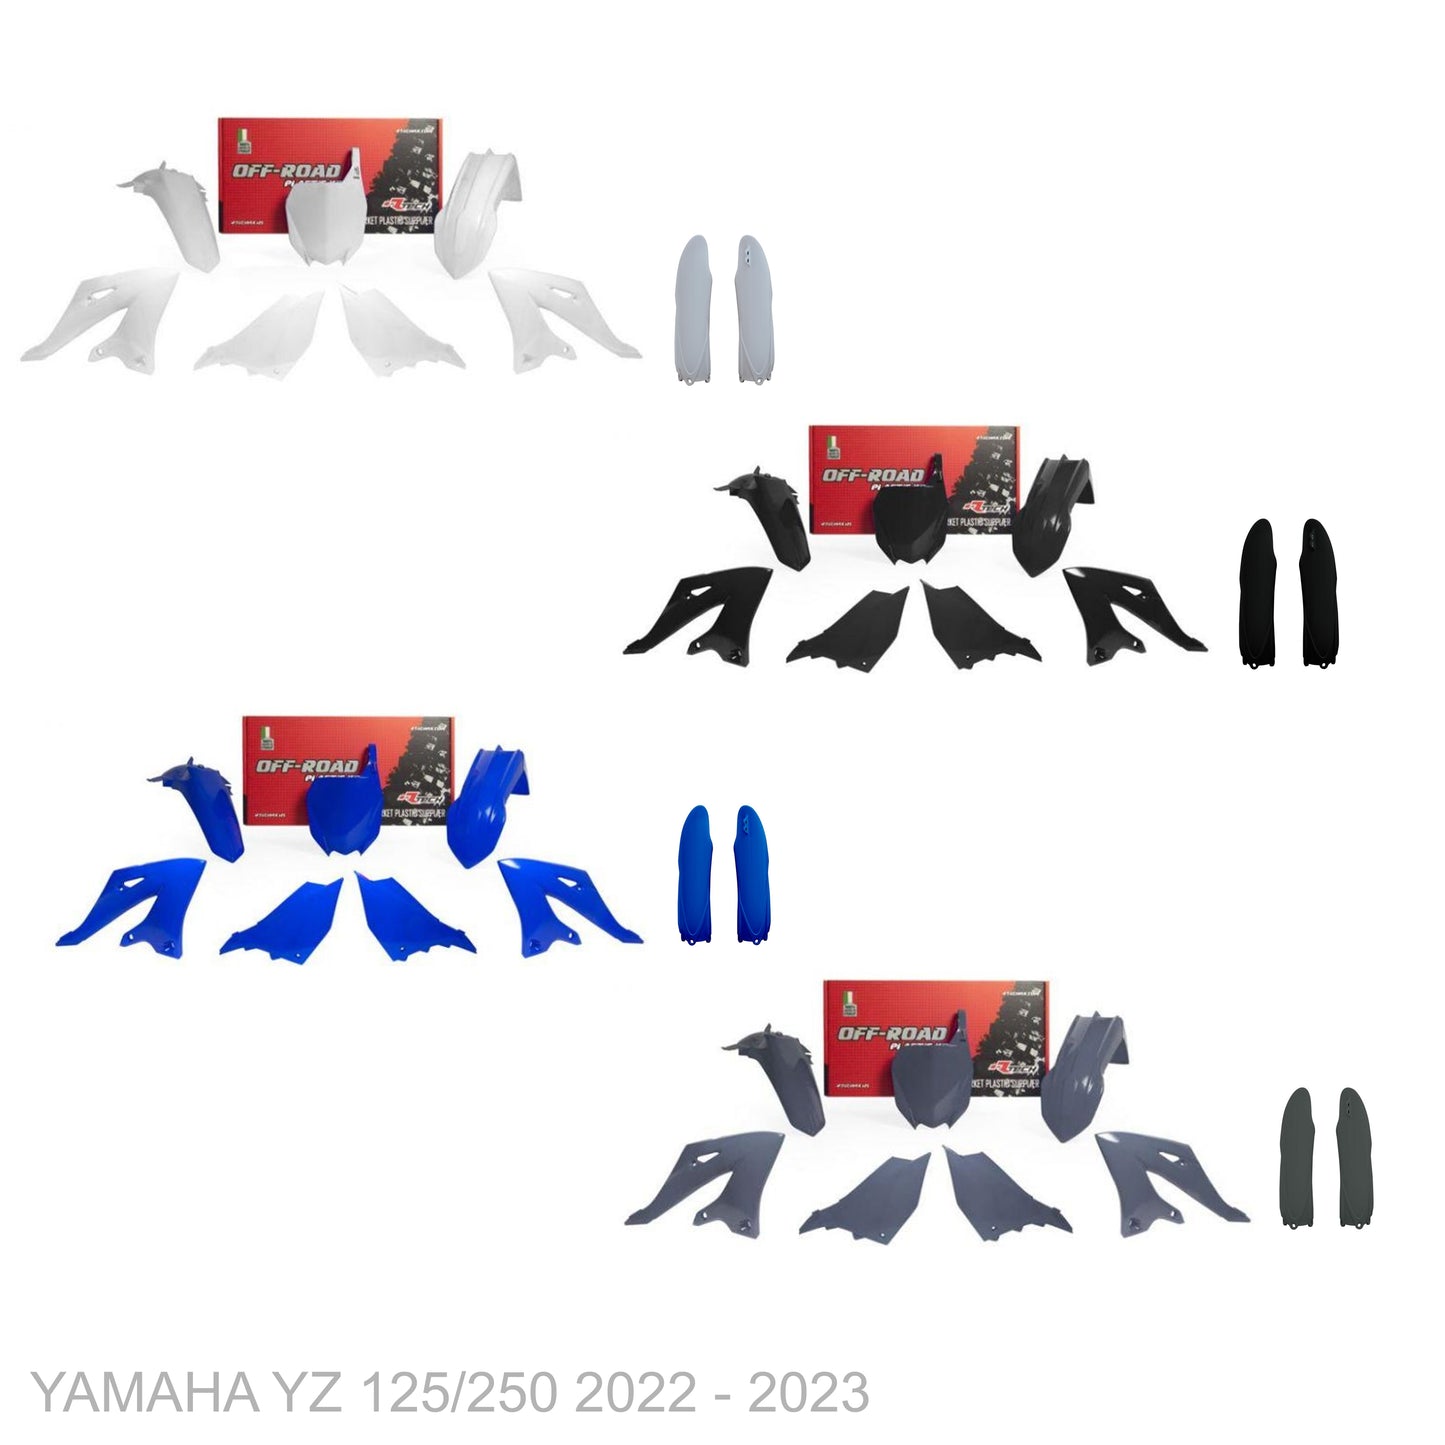 YAMAHA YZ 125/250 2022 - 2023 Start From Scratch Graphics Kits